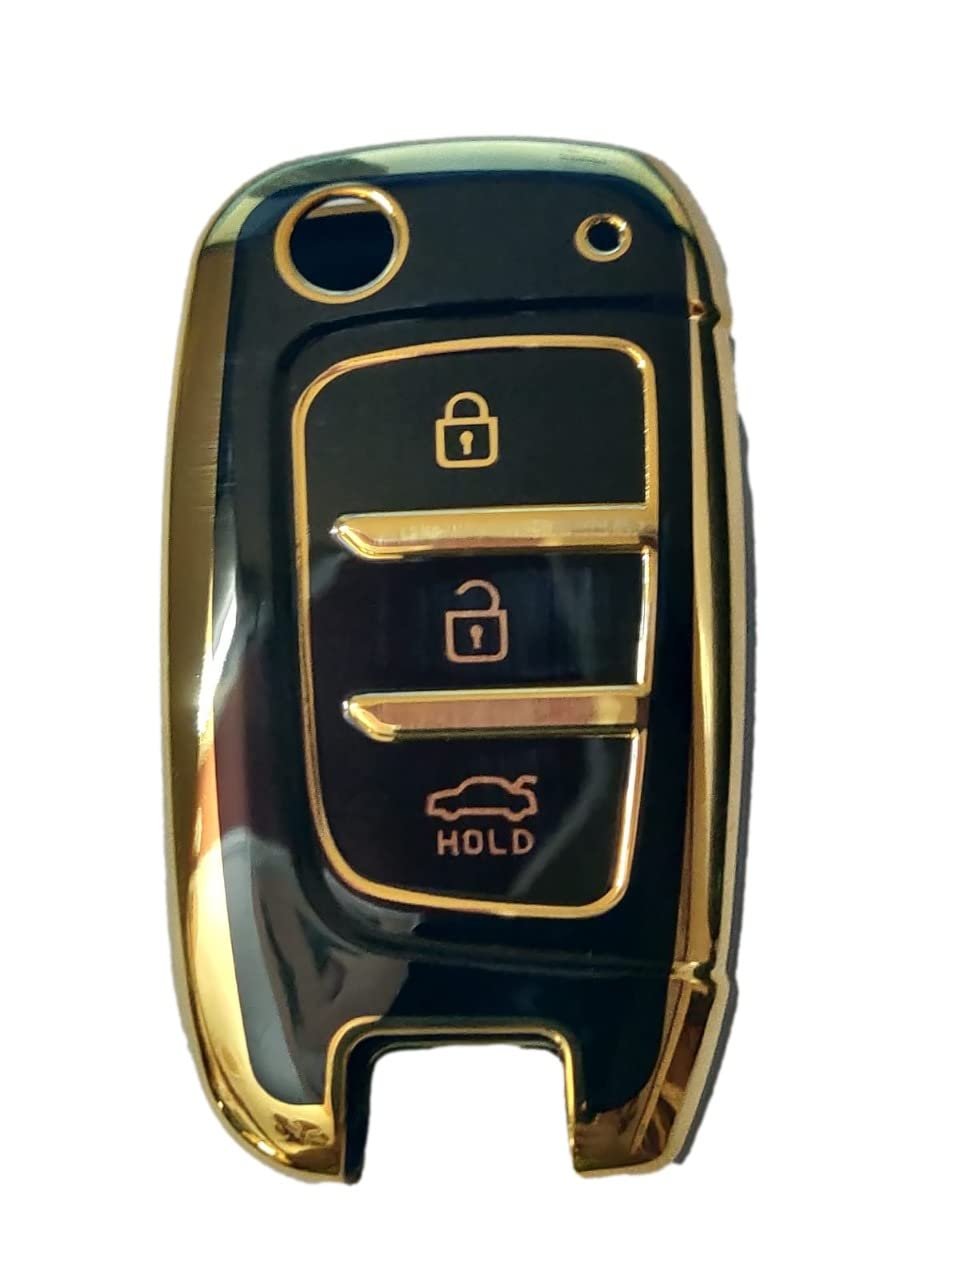 TPU Key Cover Compatible for Hyundai Verna/Elantra/Tucson 2017 Onwards 3 Button Flip Key (Black) Image